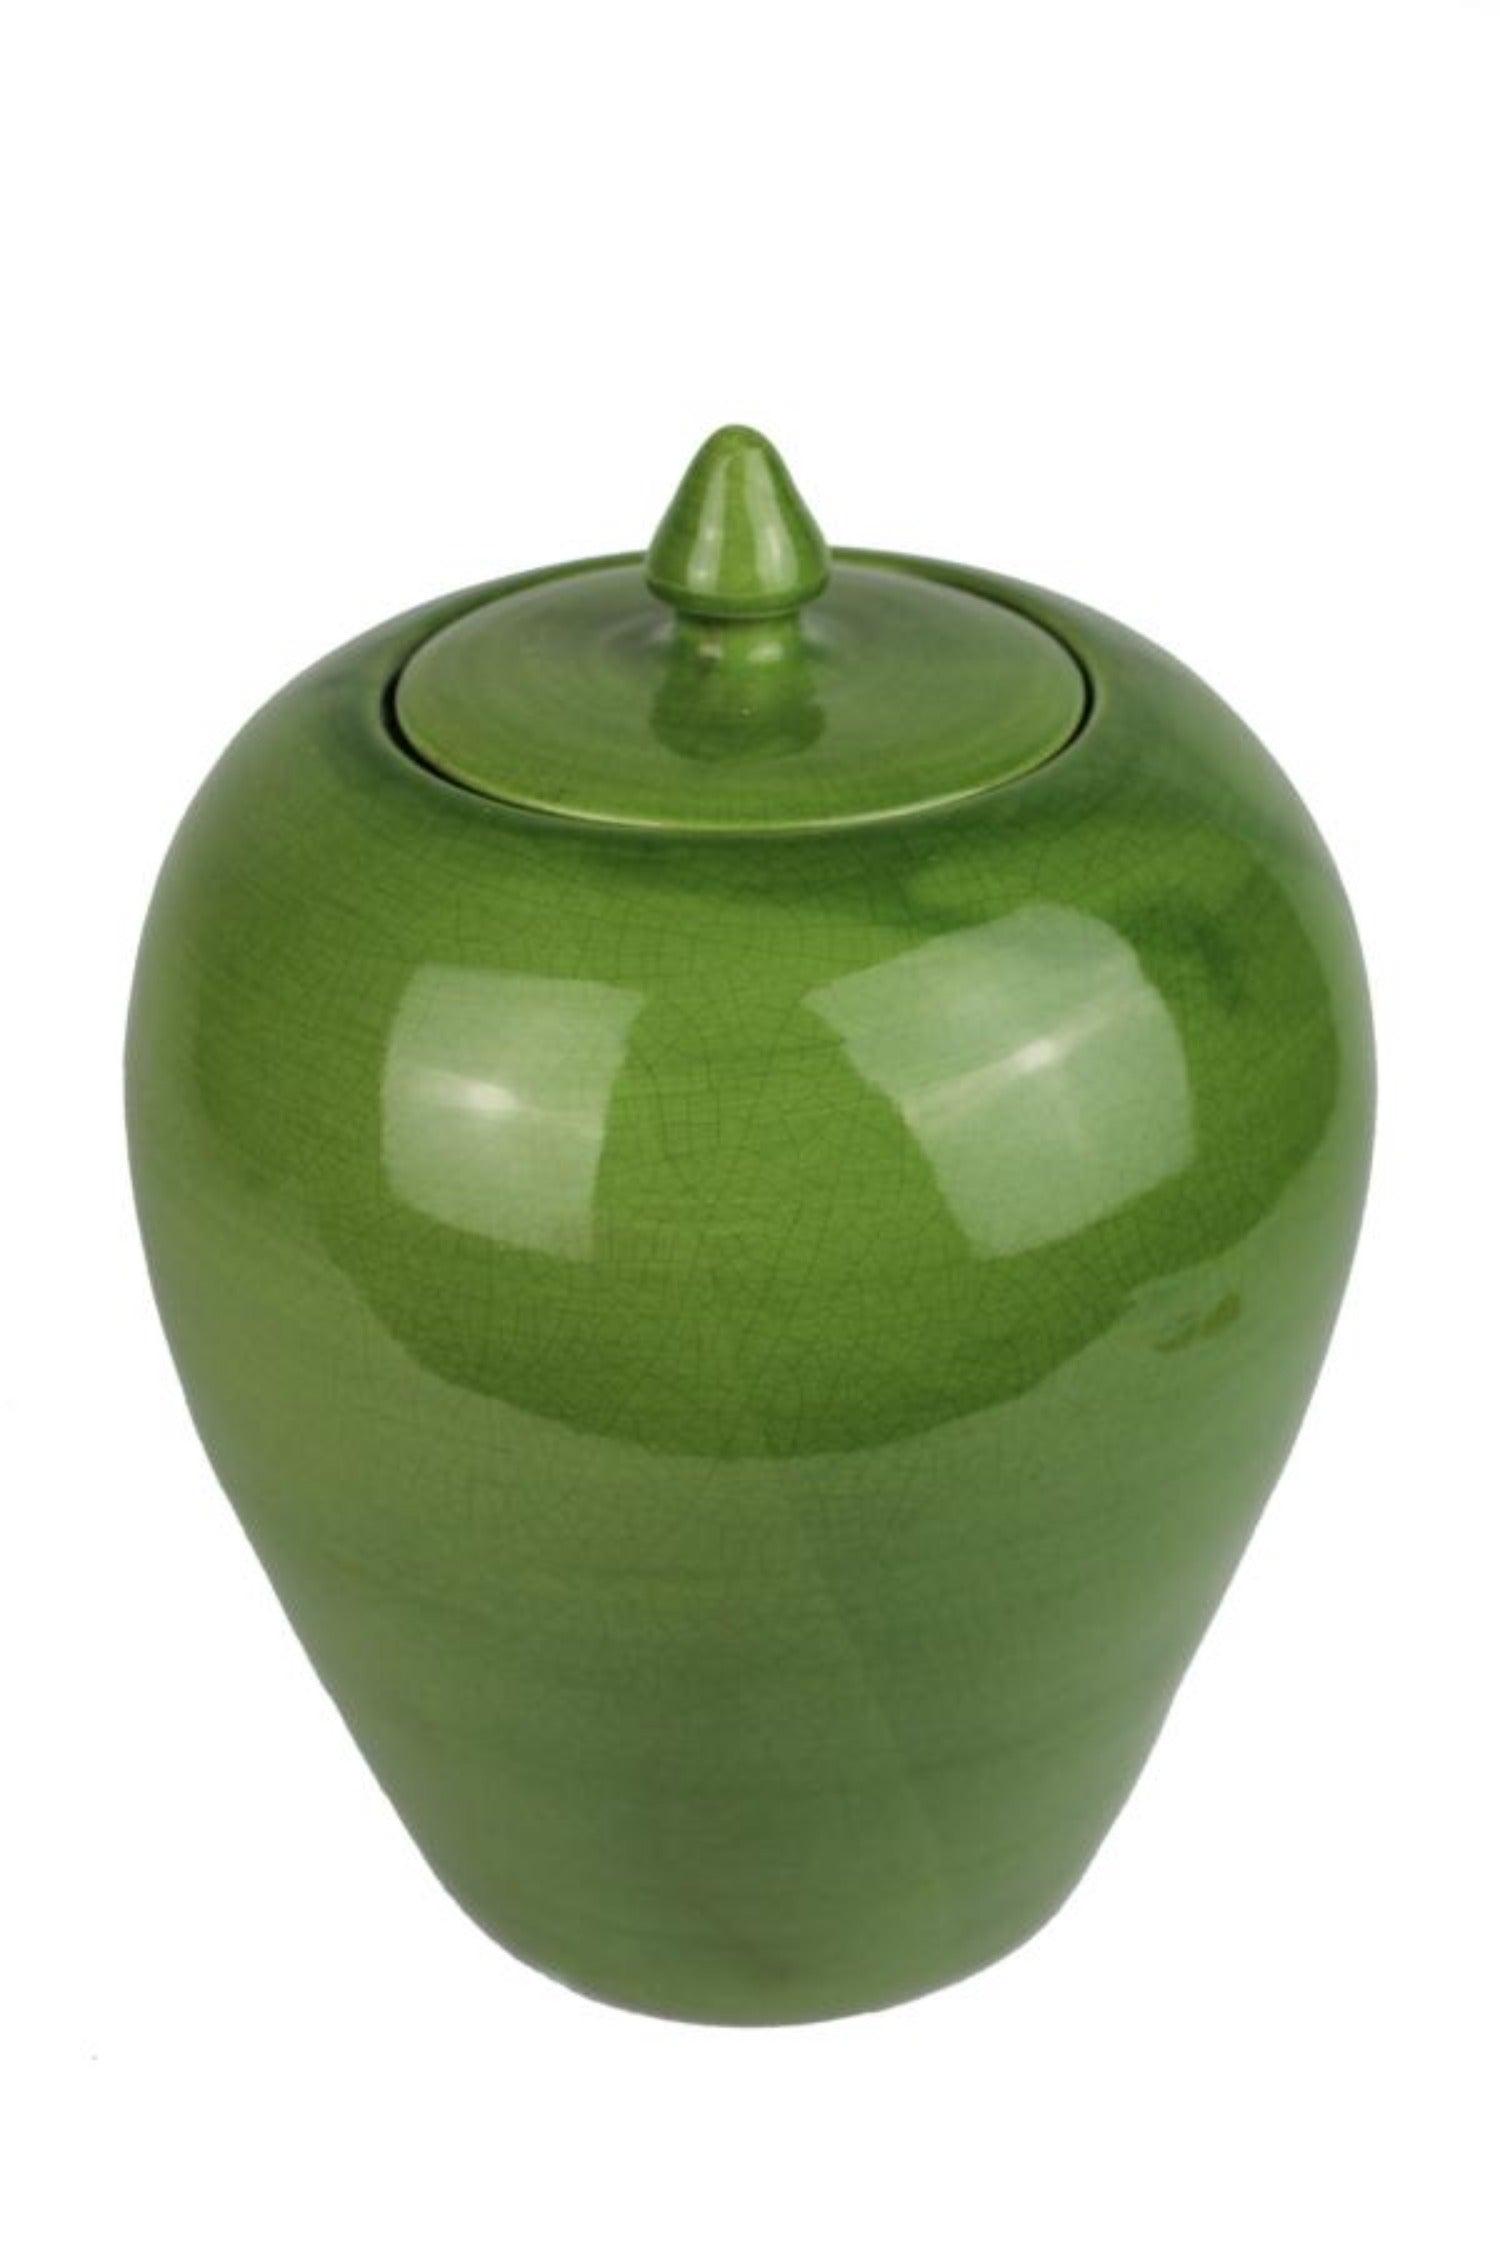 grüne Vase aus Keramik mit Deckel